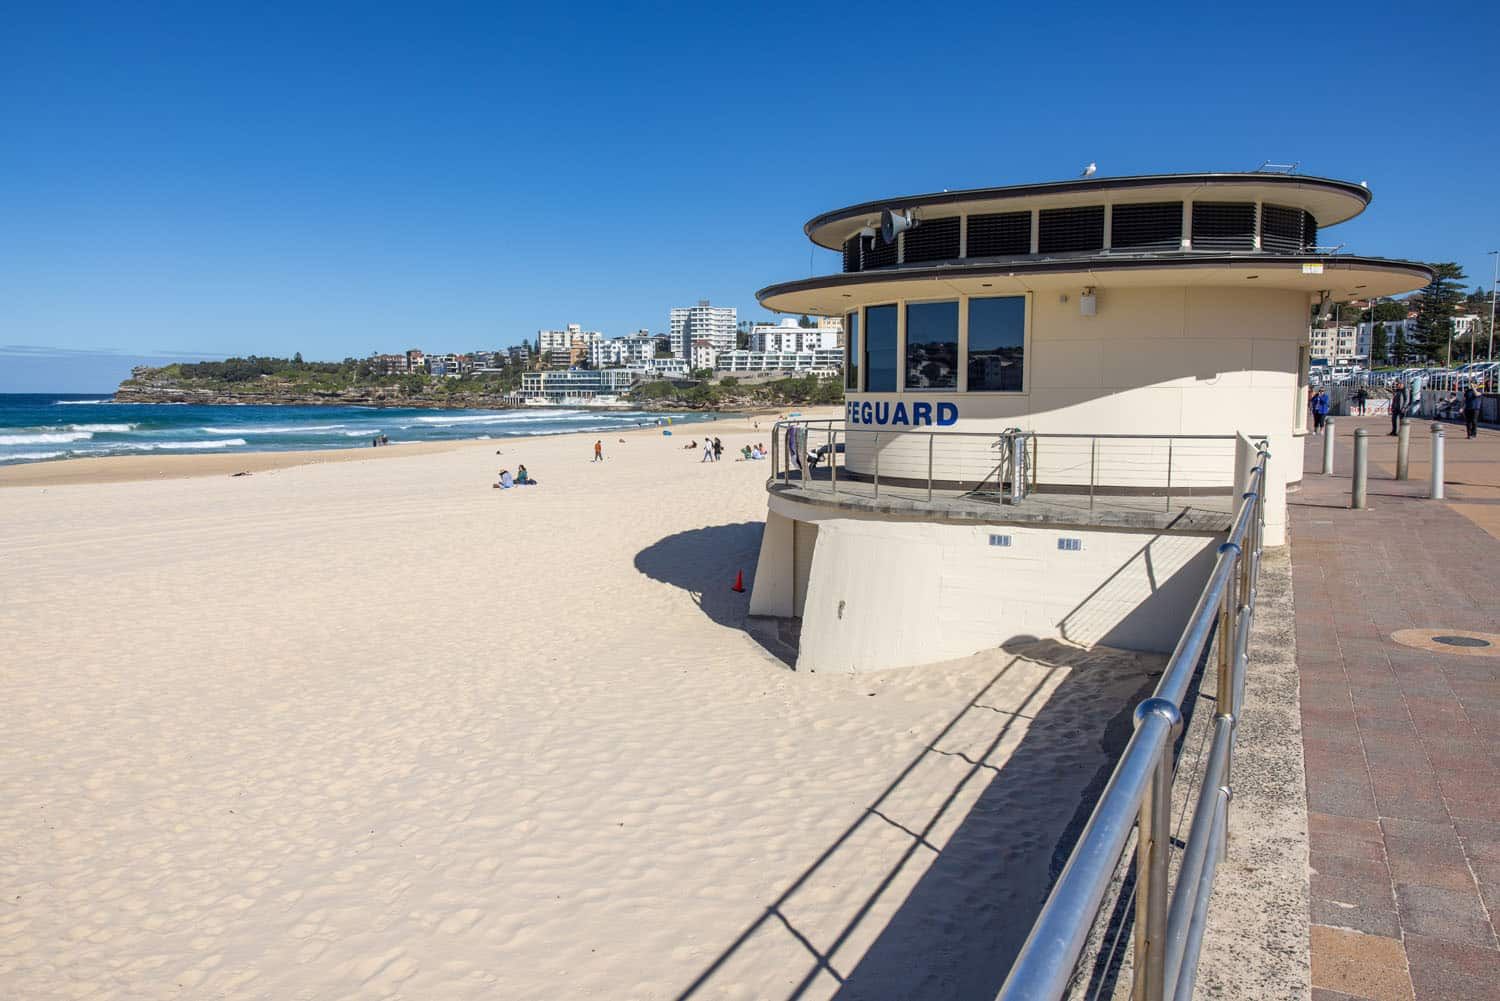 Bondi Beach Lifeguard Stand | Best Beaches in Sydney